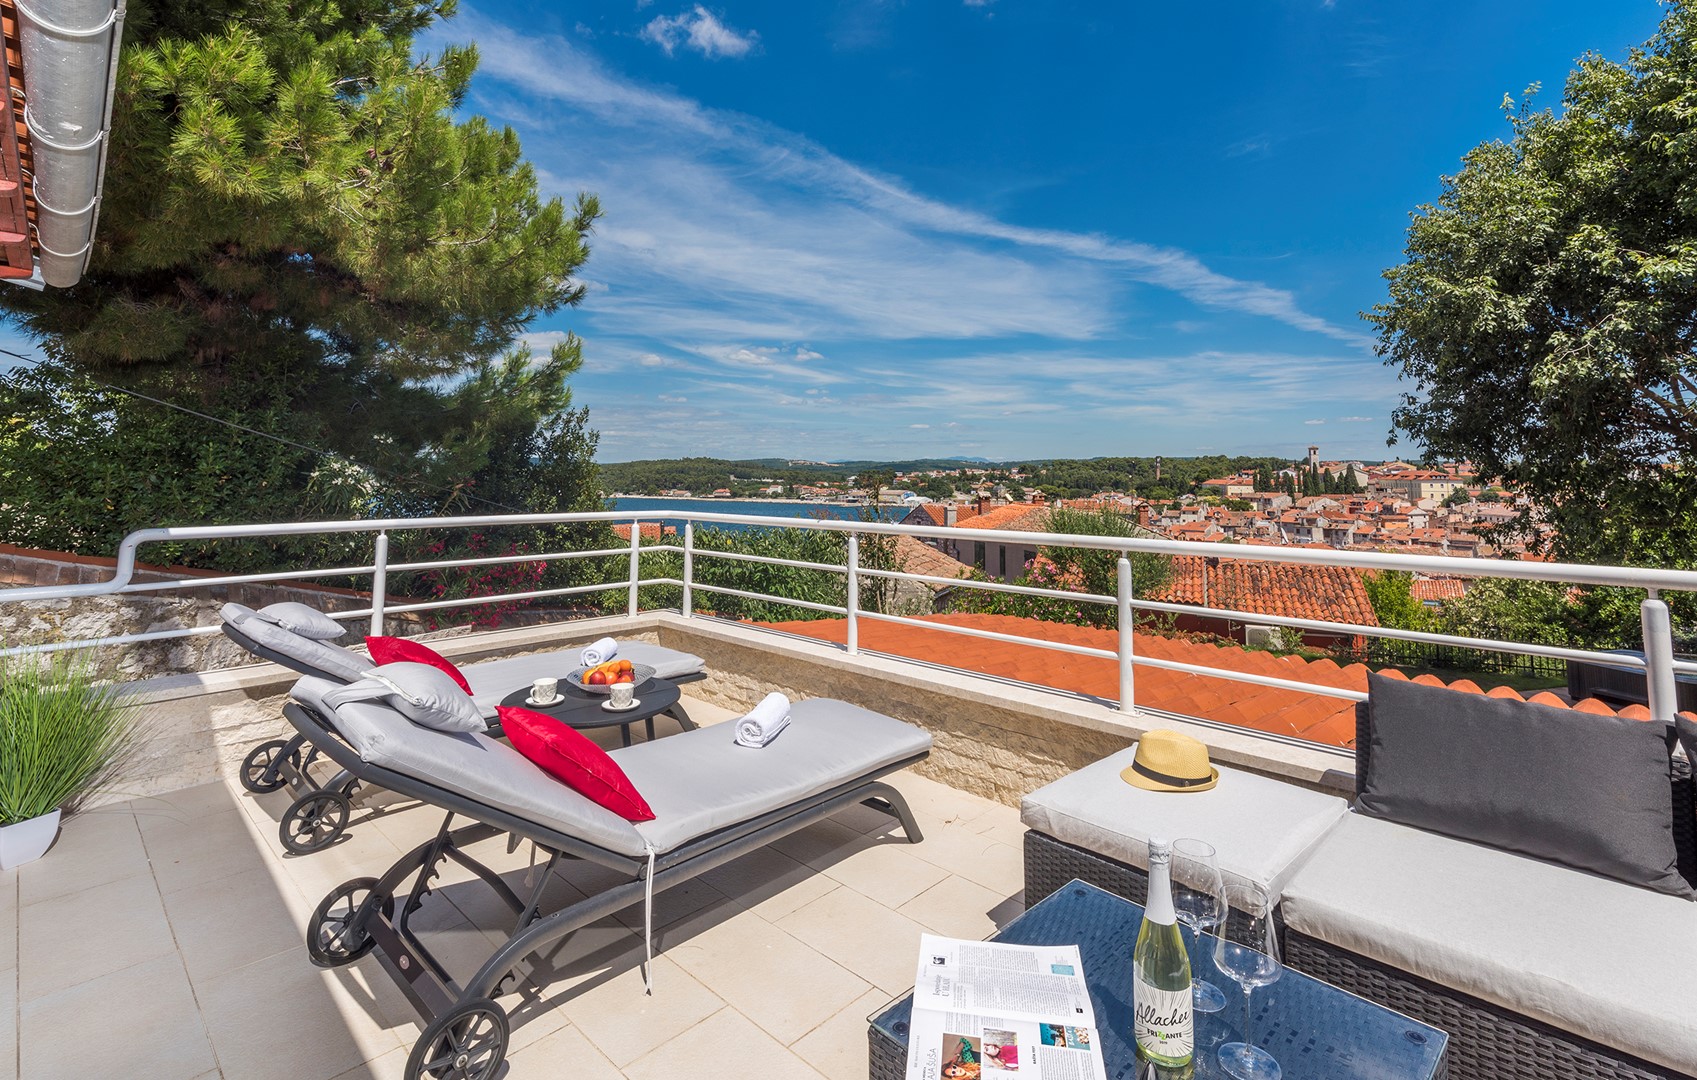 Deluxe Villa Royal with Sea View  in Kroatien